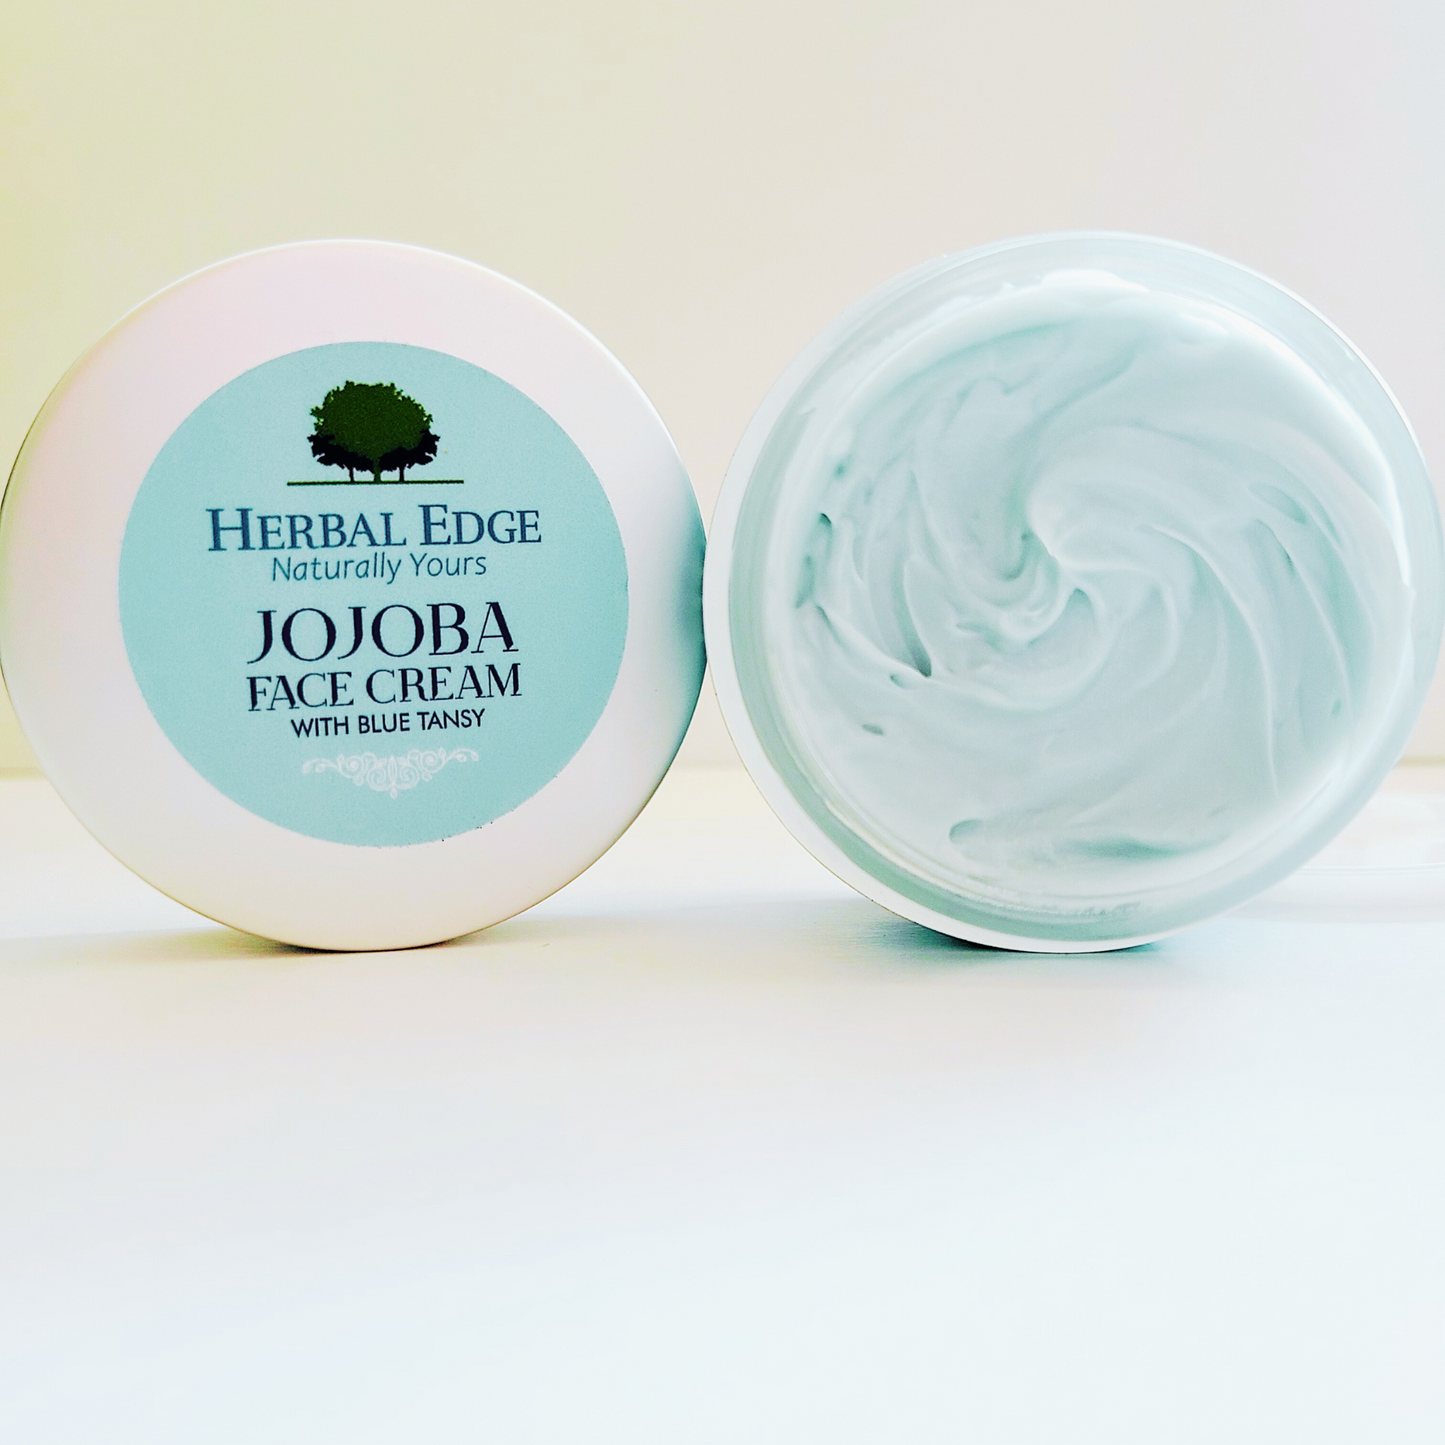 Jojoba Face Cream with Blue Tansy